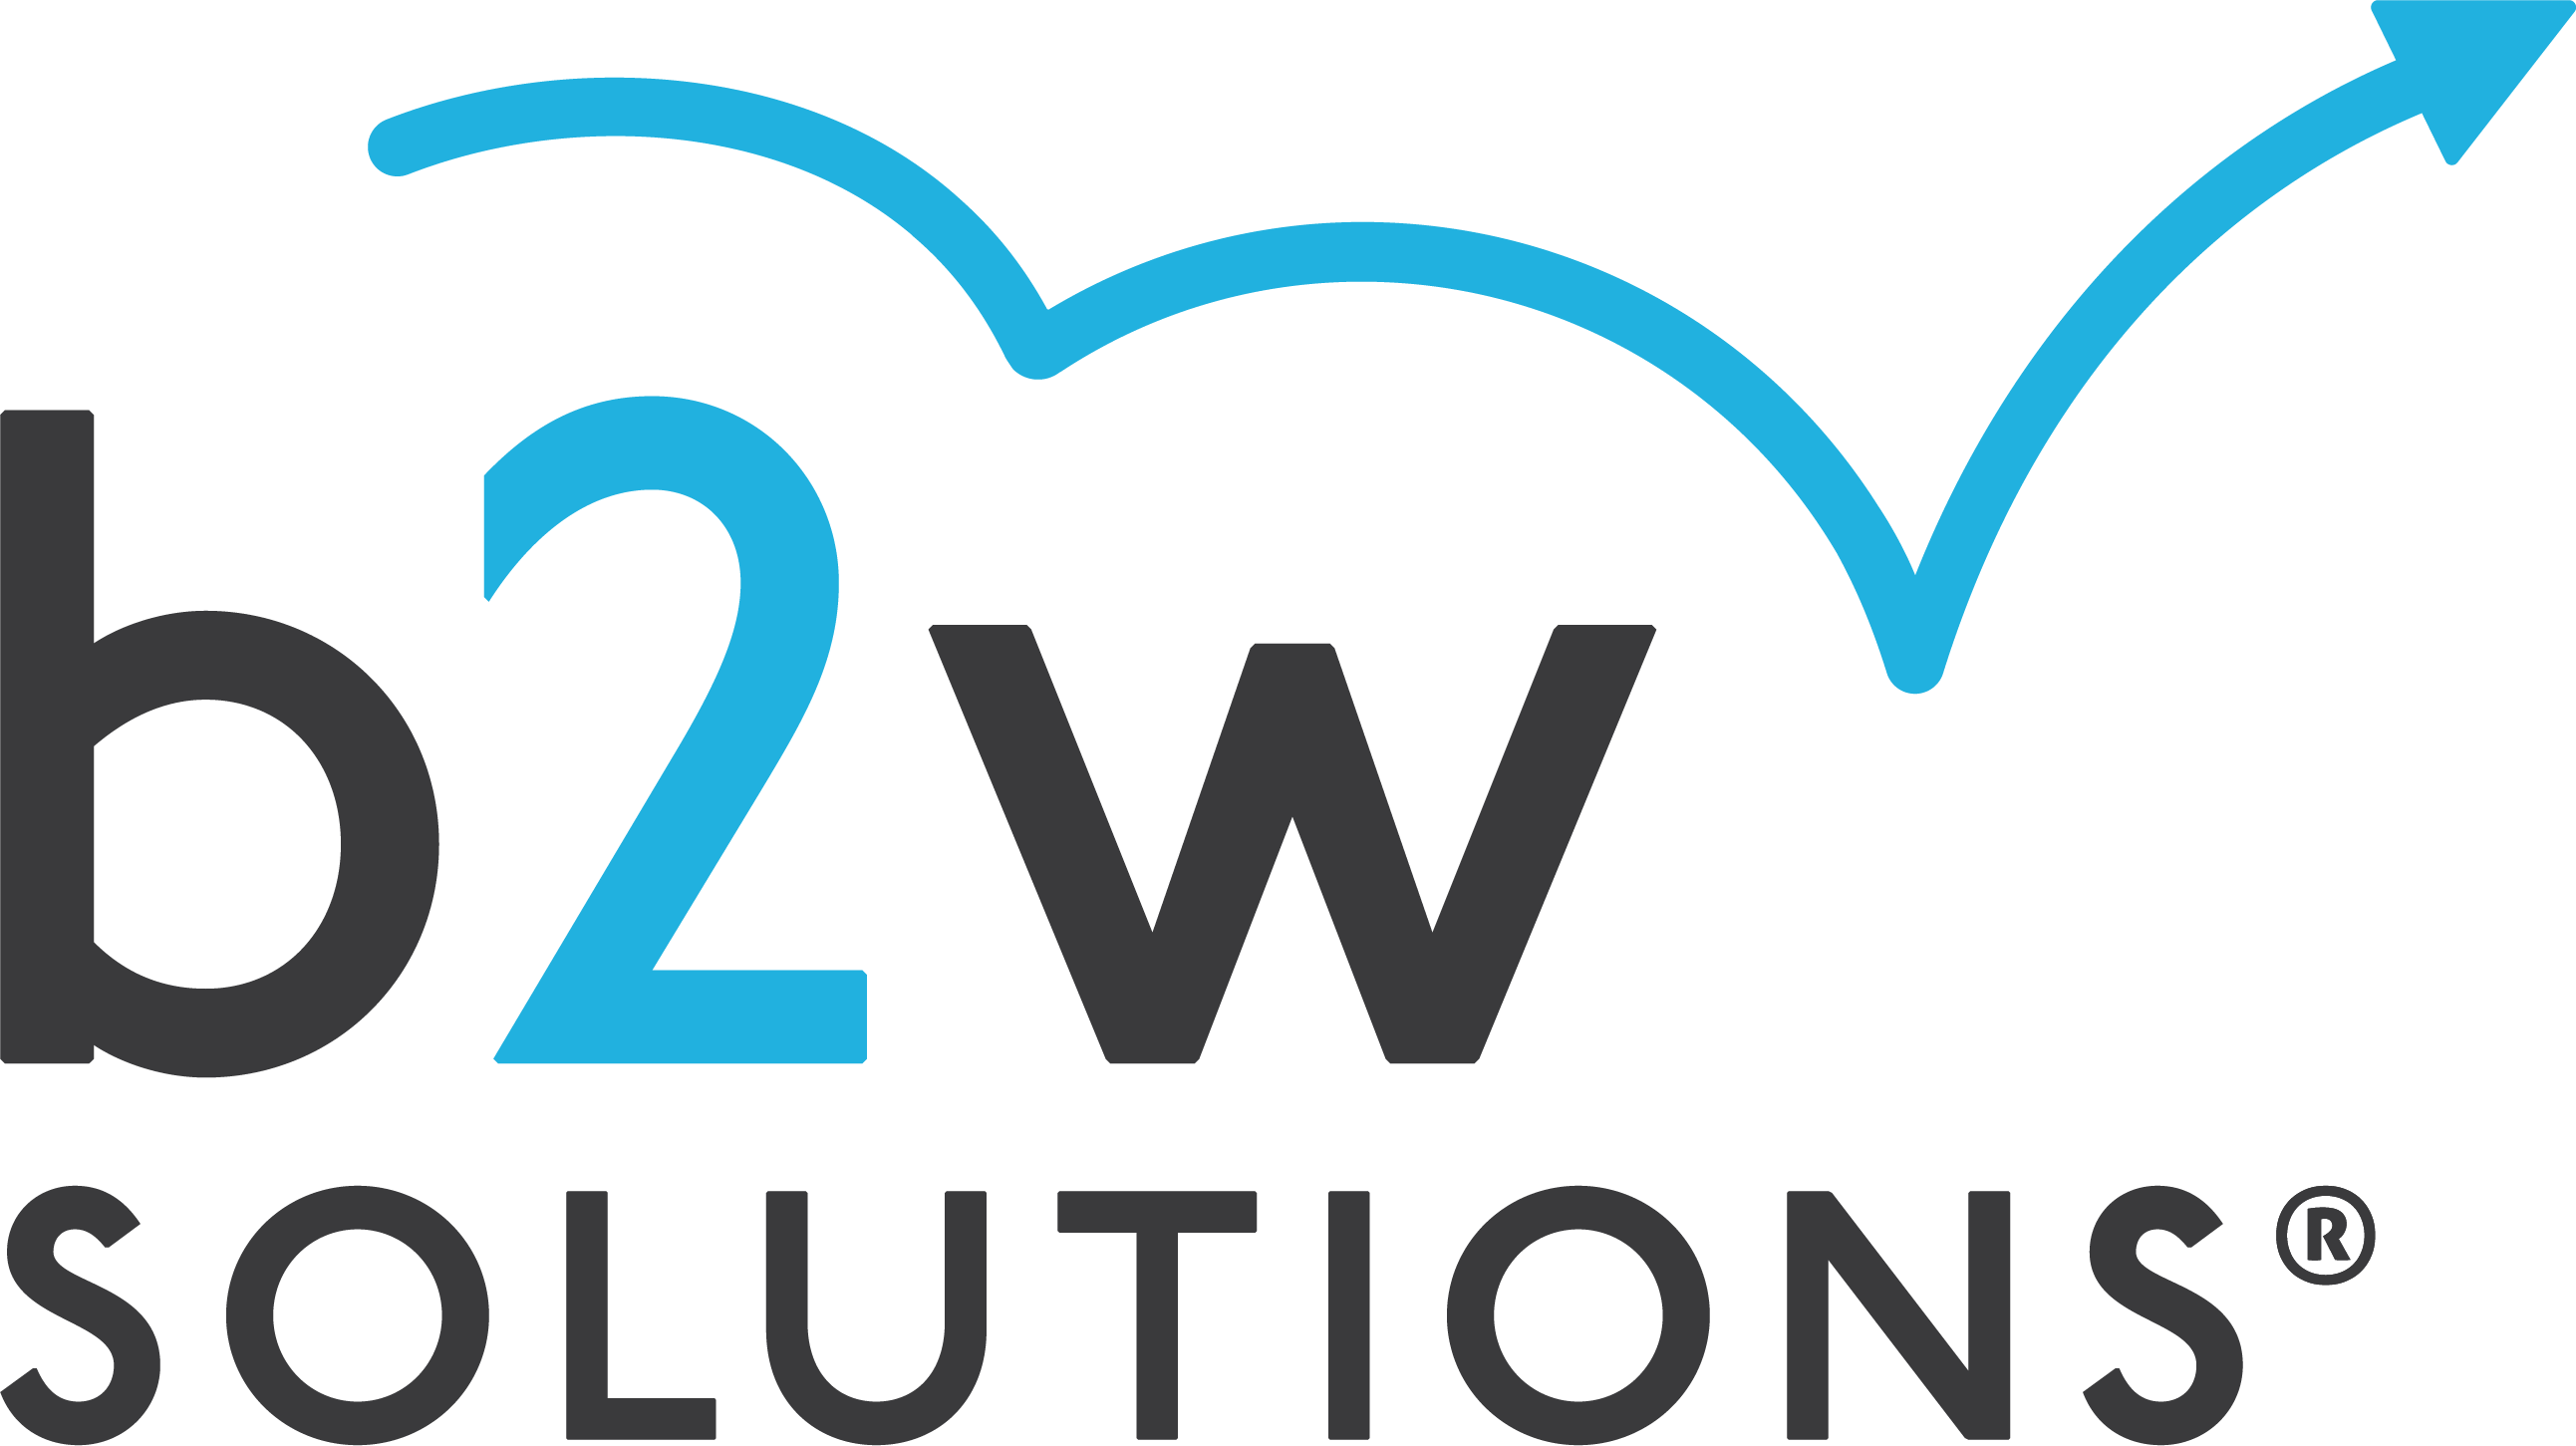 B2W Solutions